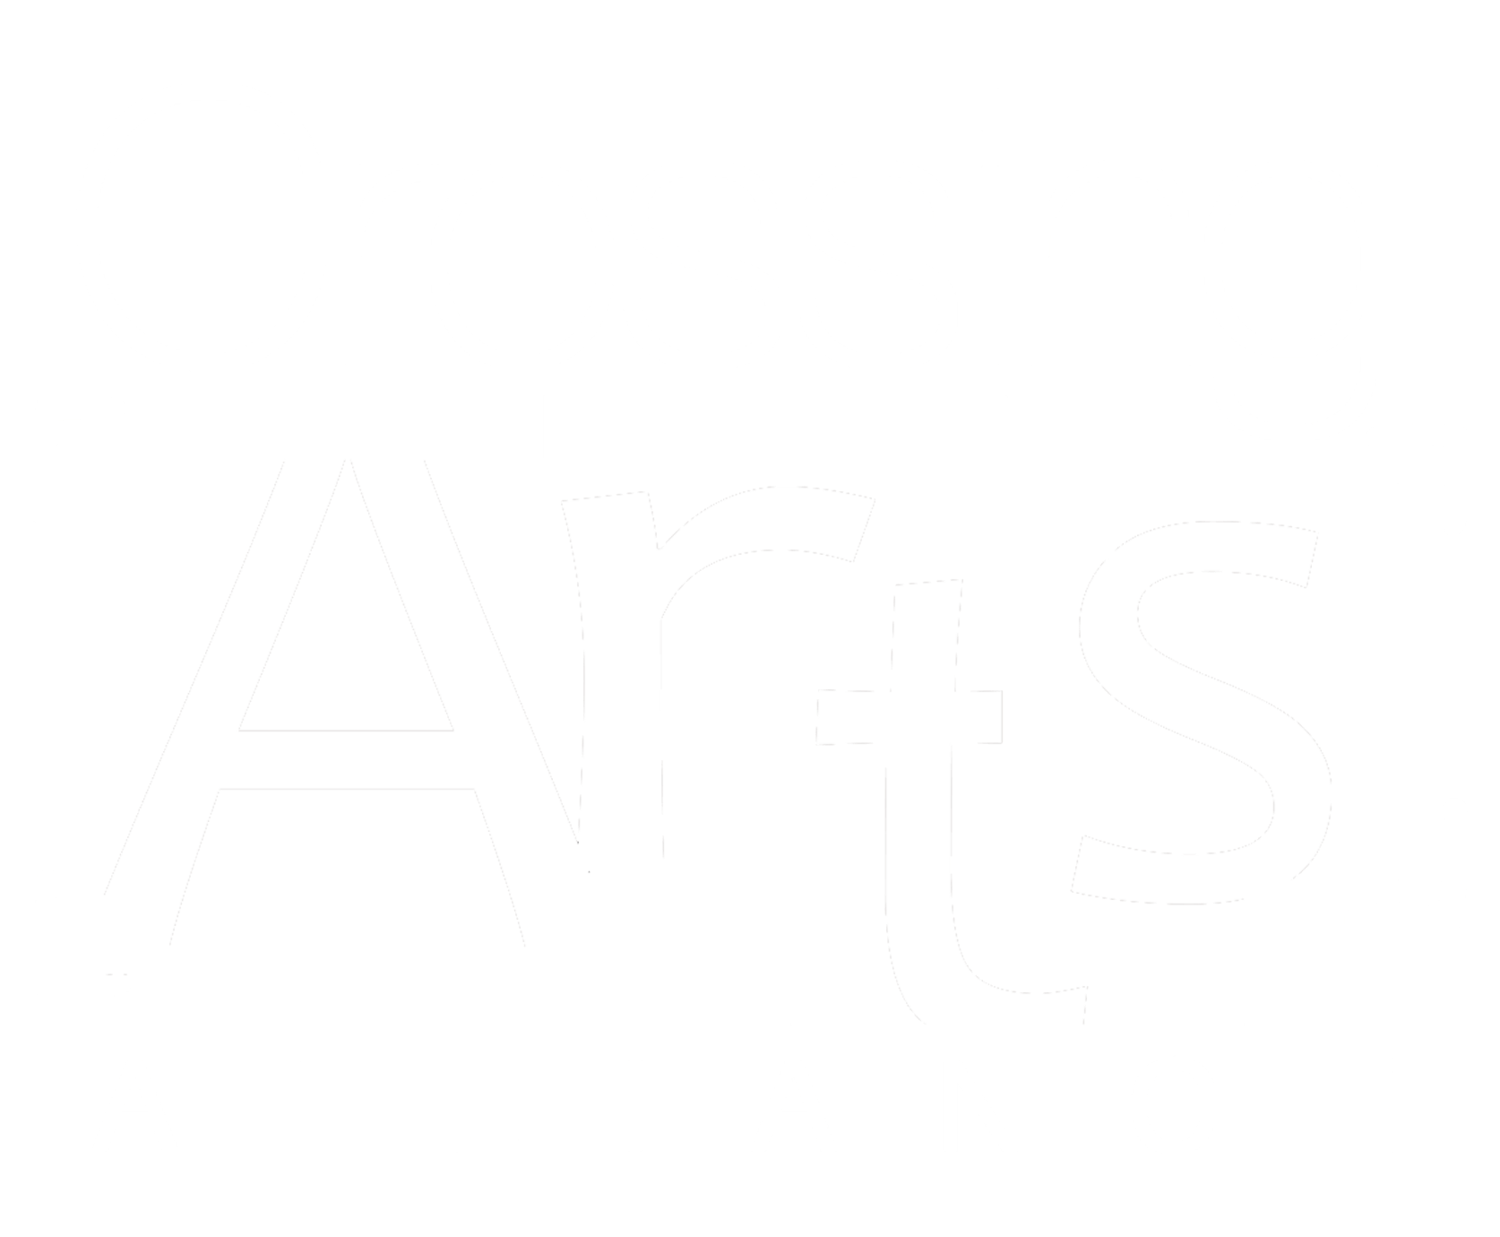 Crossing Arts Alliance